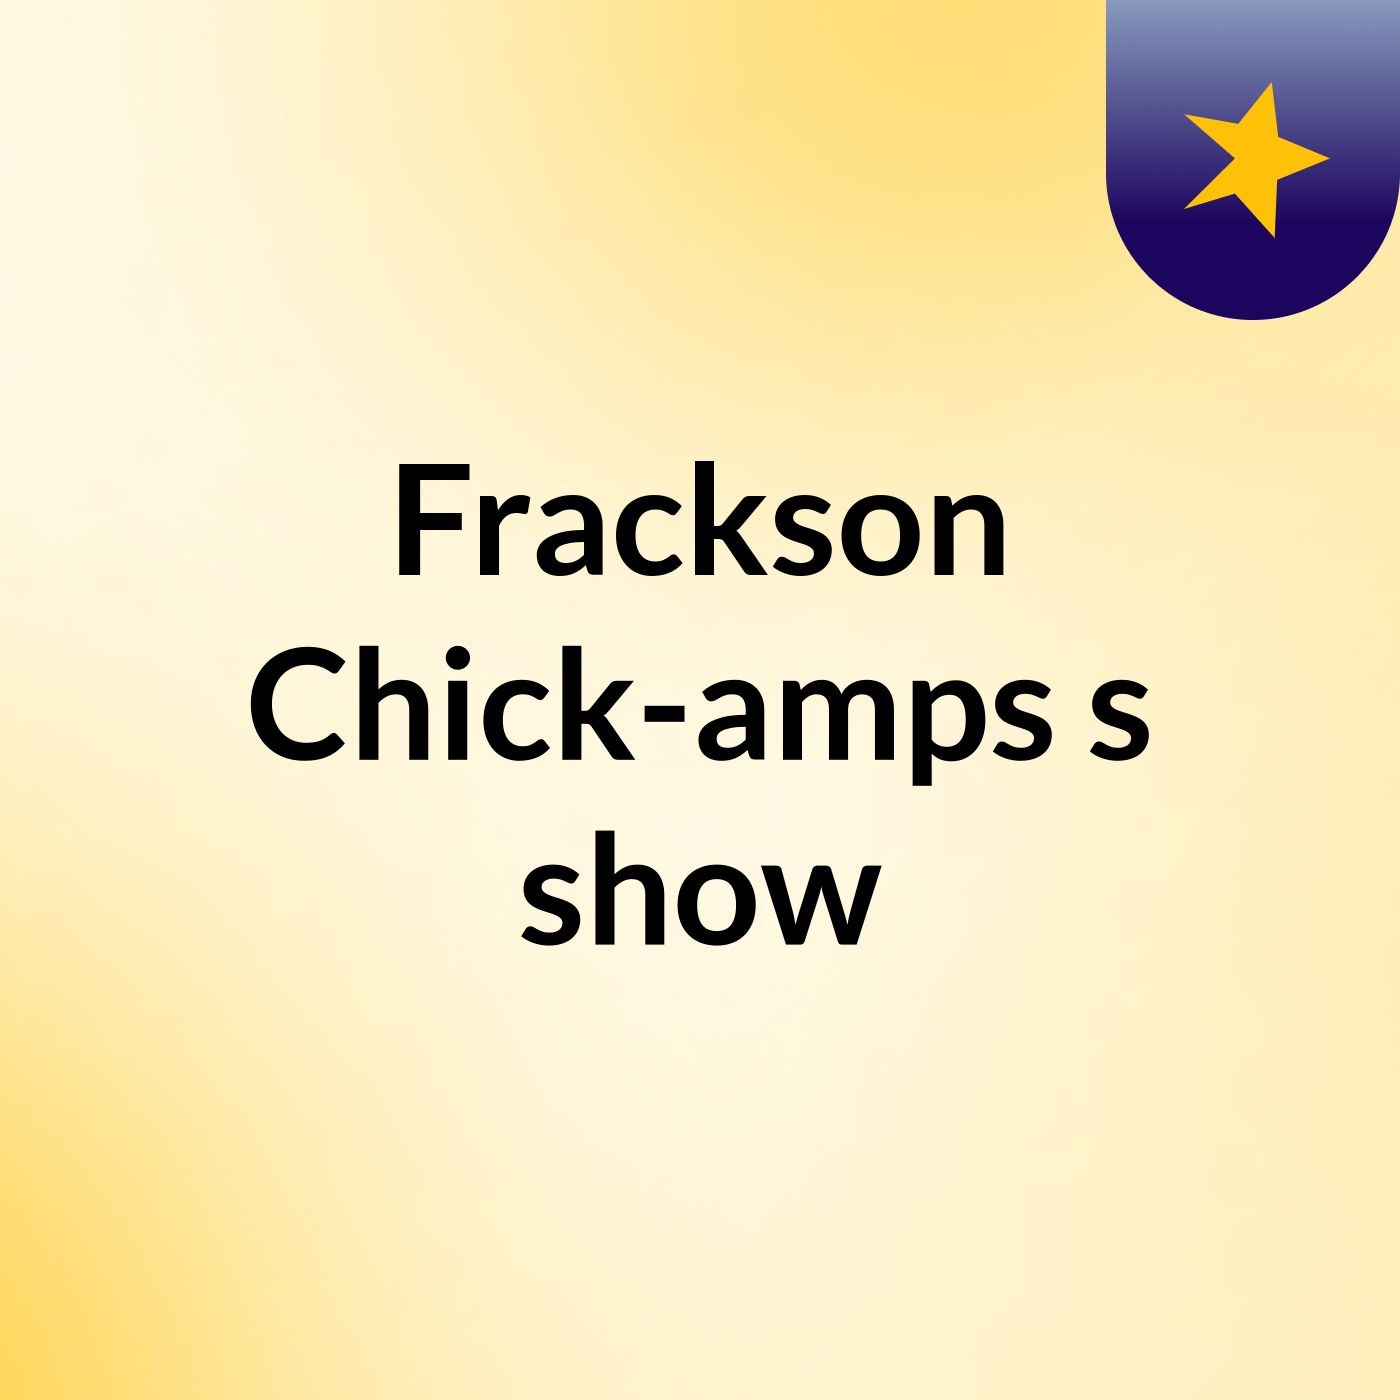 Frackson Chick-amps's show